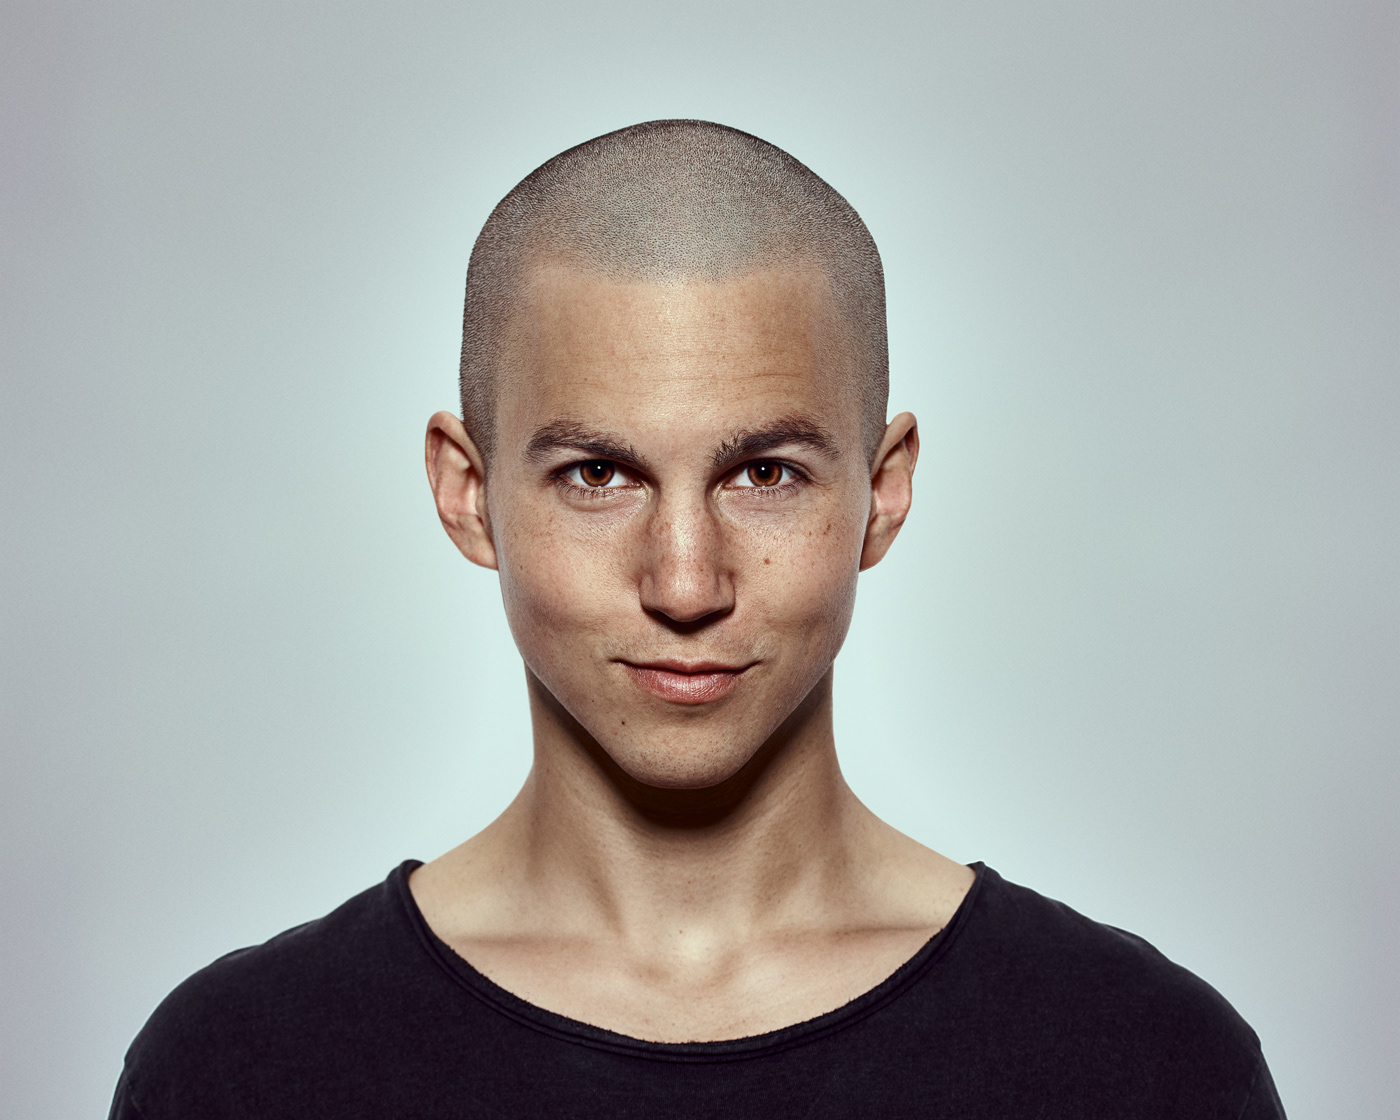 portrait actor Celebrity Agentur Adam vox grithackenberg postproduction haircut bald head tim oliver schultz